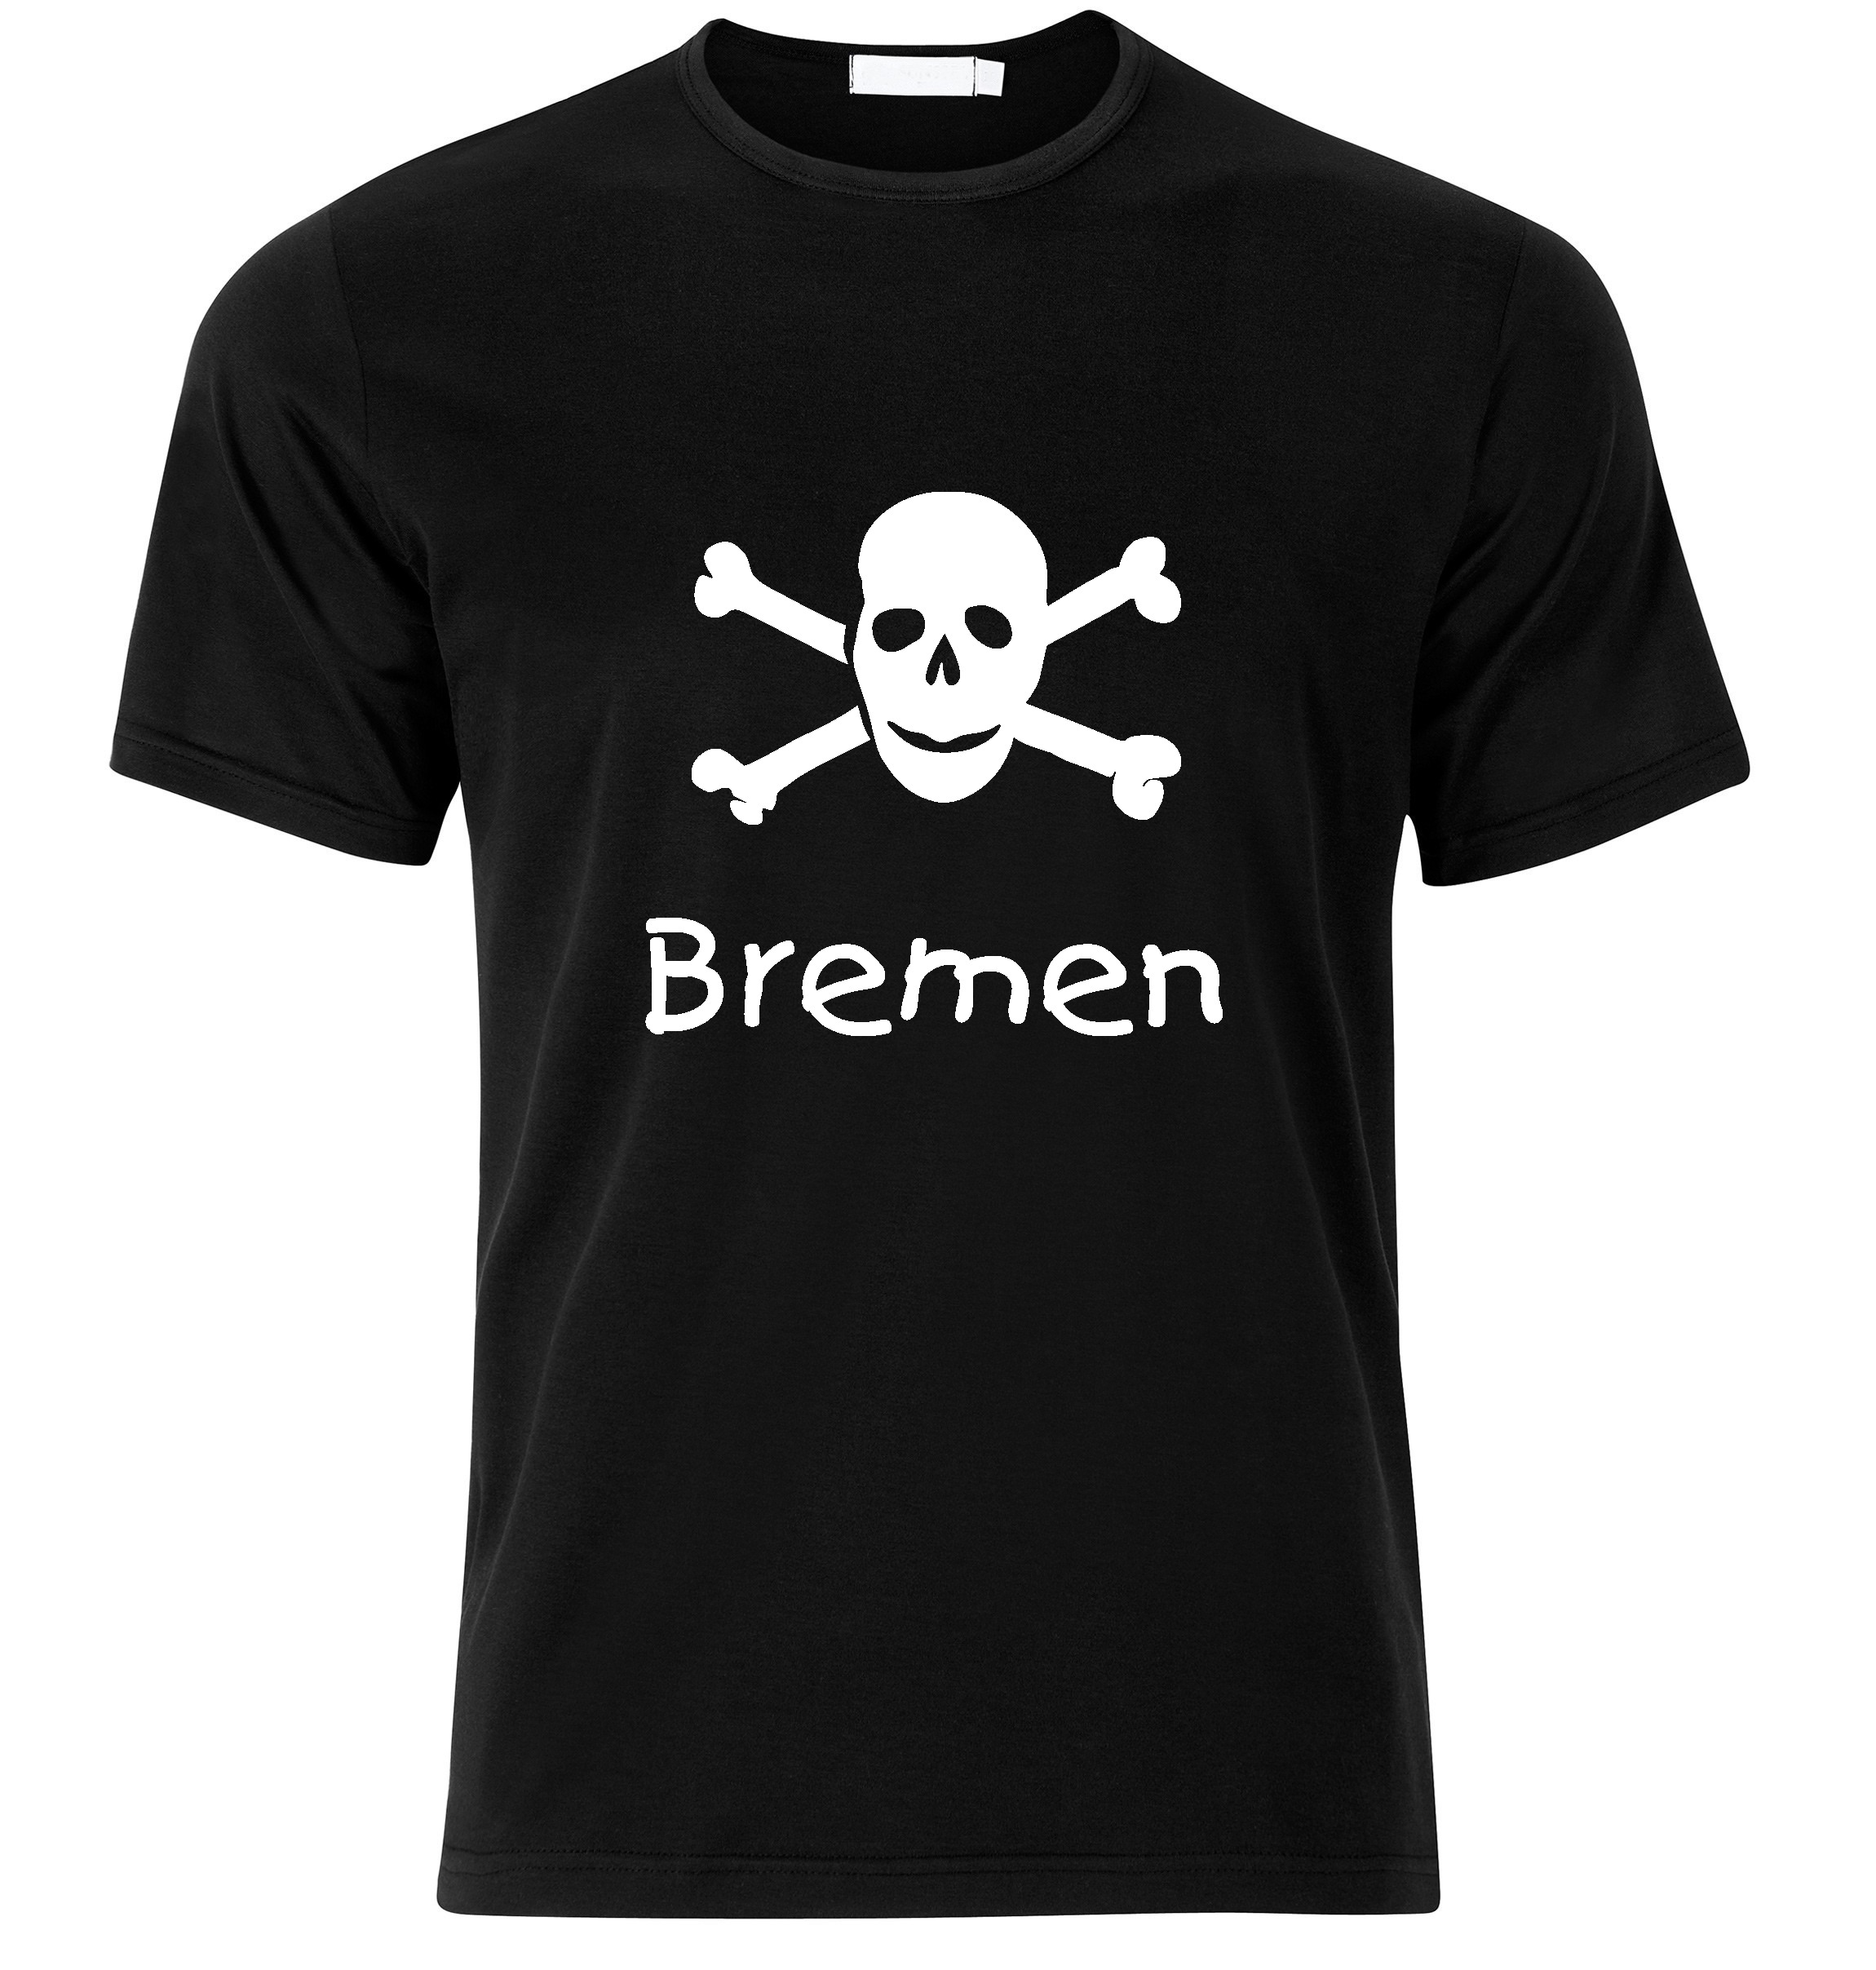 T-Shirt Bremen Jolly Roger, Totenkopf